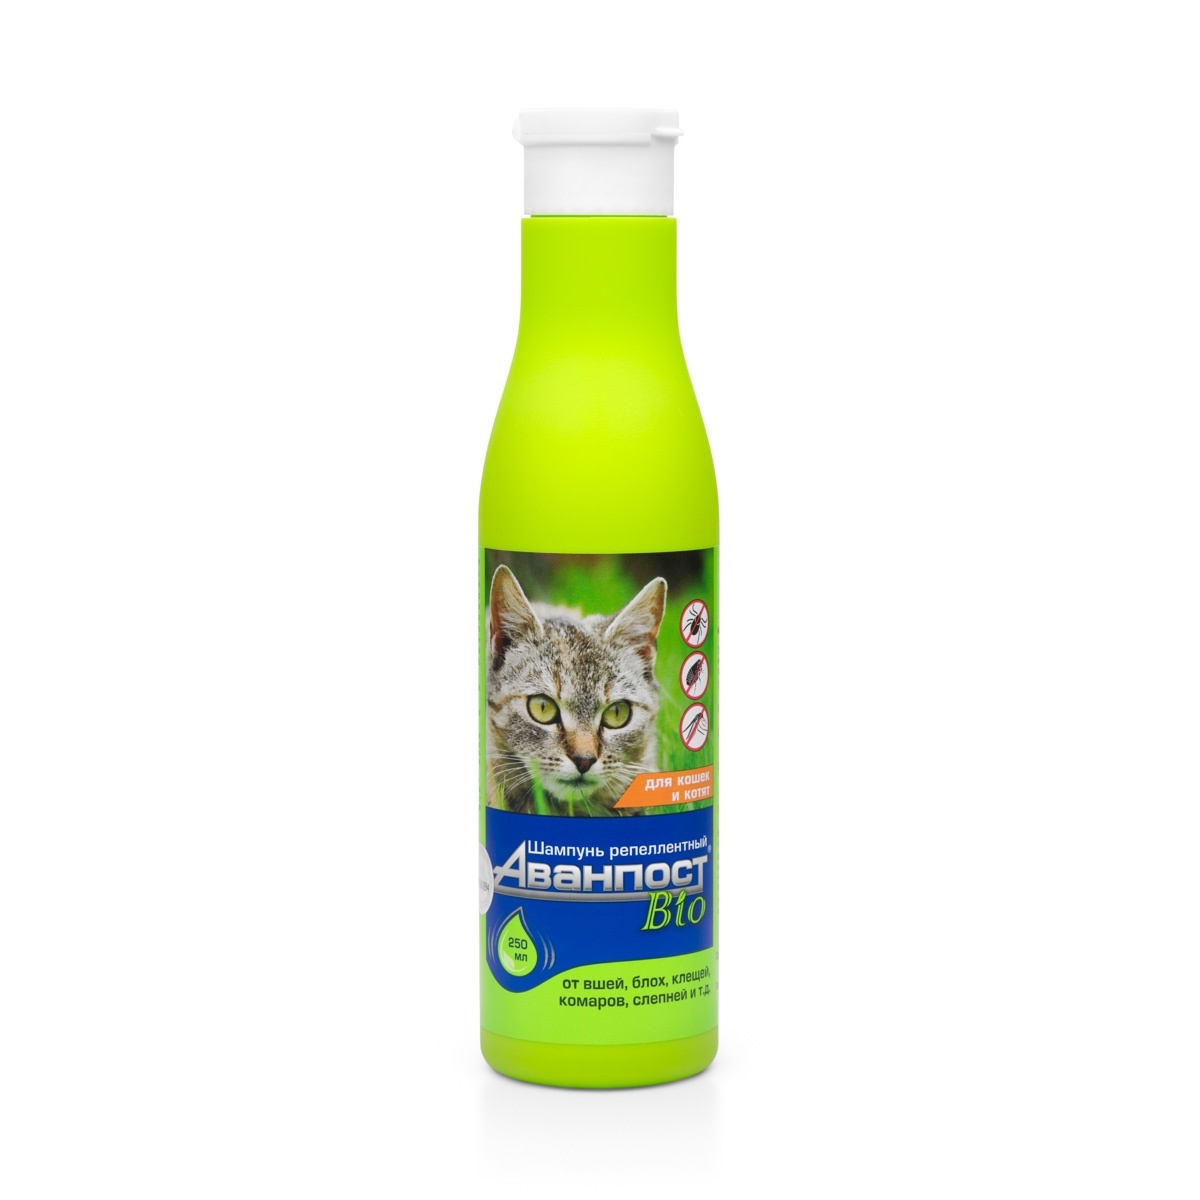 Веда Веда Аванпост BIO шампунь репеллентный для кошек (250 г) веда веда шампунь витаминный для грызунов 220 г